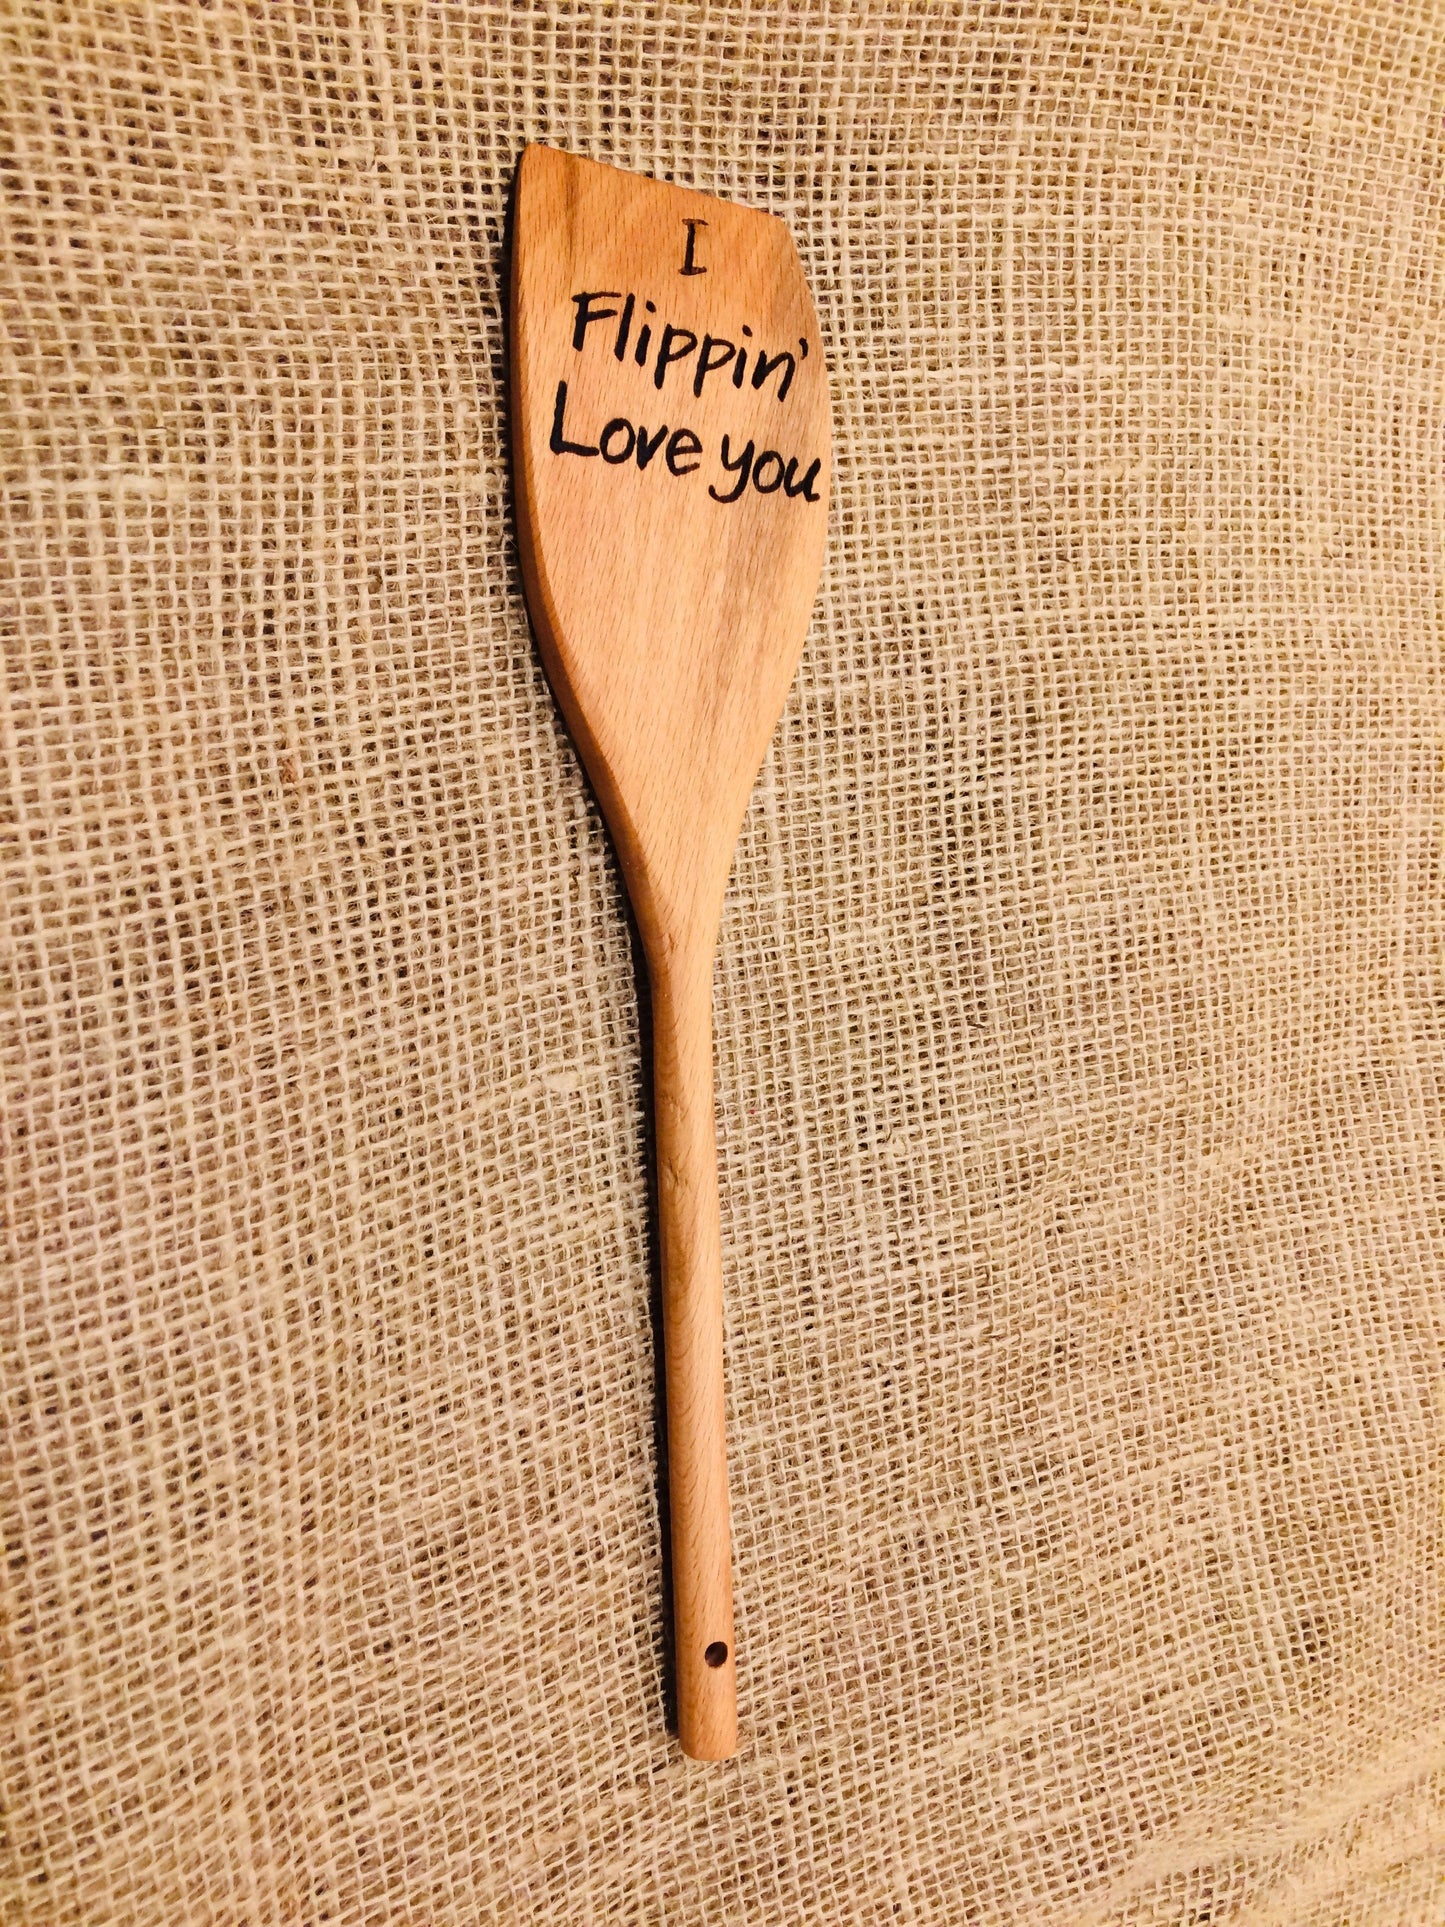 Custom Spatula - Engraved Wood "I Flippin' Love You" Spatula Big River Hardware 